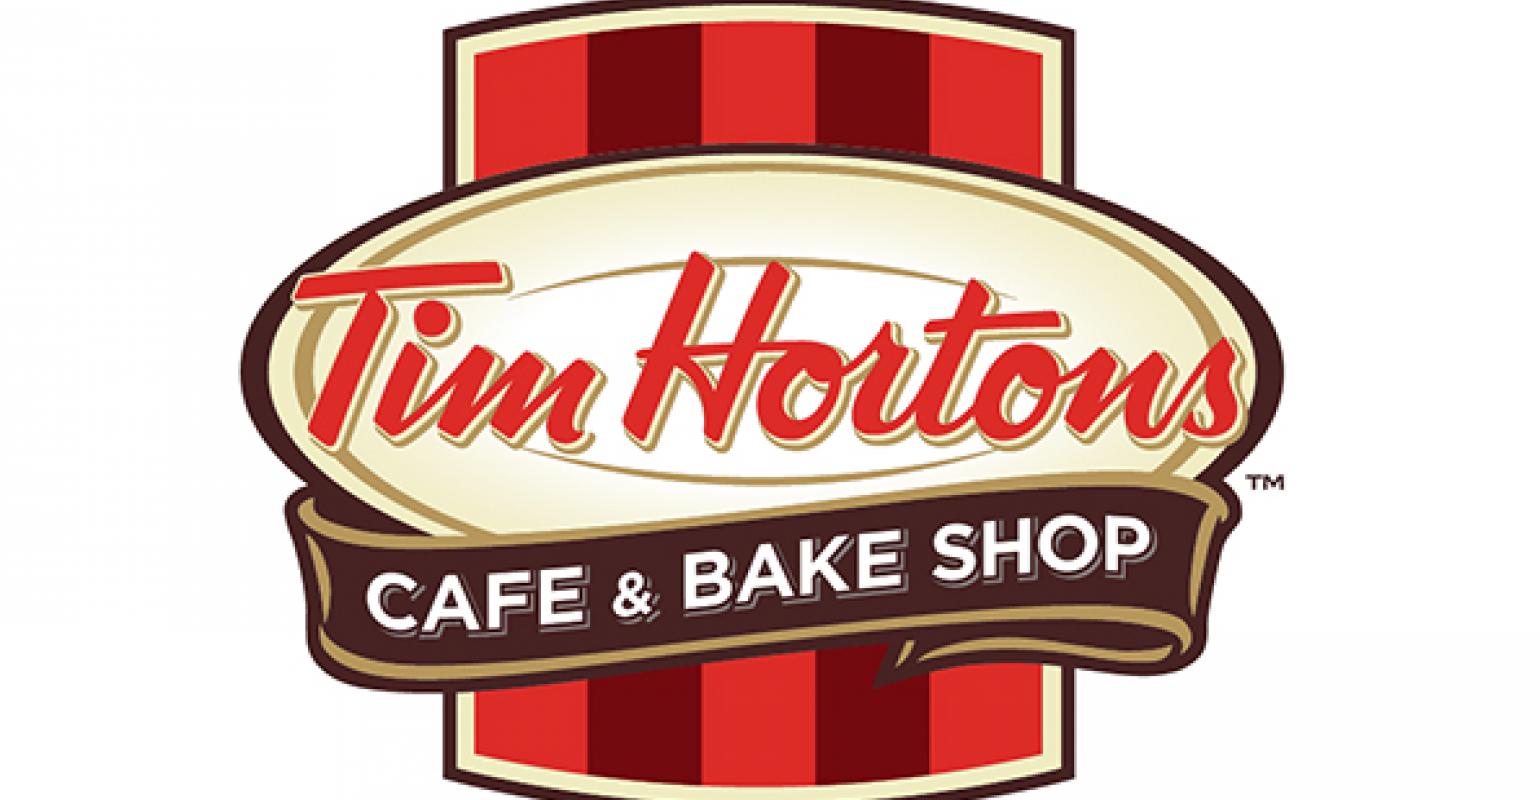 Tim Hortons U.S. same-store sales gain momentum in the third quarter